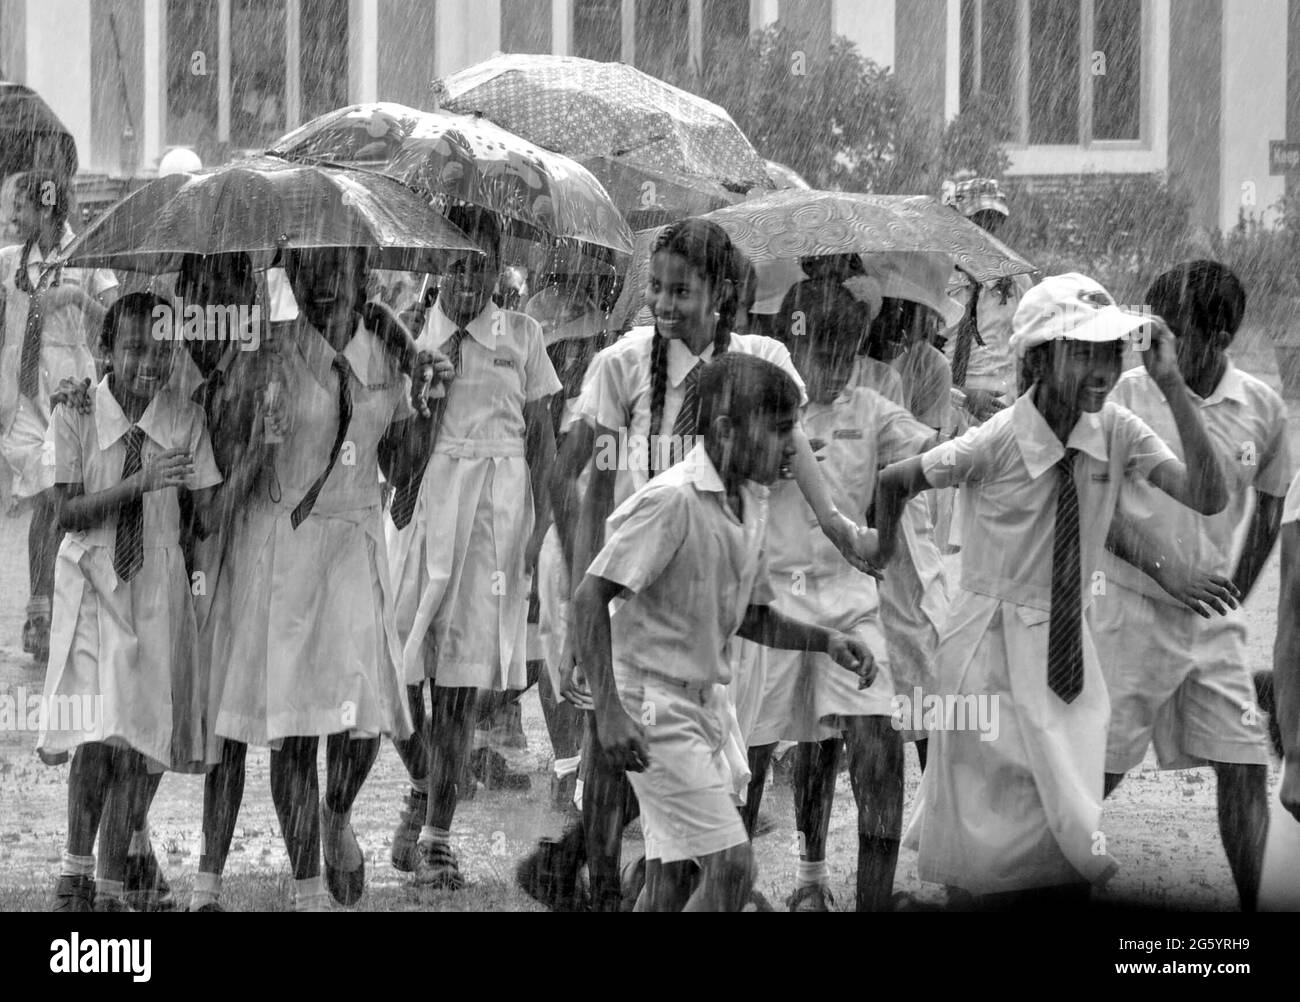 Padukka,srilanka- 30. september 2016:Studenten mit Regenschirmen auf dem verregneten Gelände der siripiyarathana Hochschule in Padukka,colombo Stockfoto